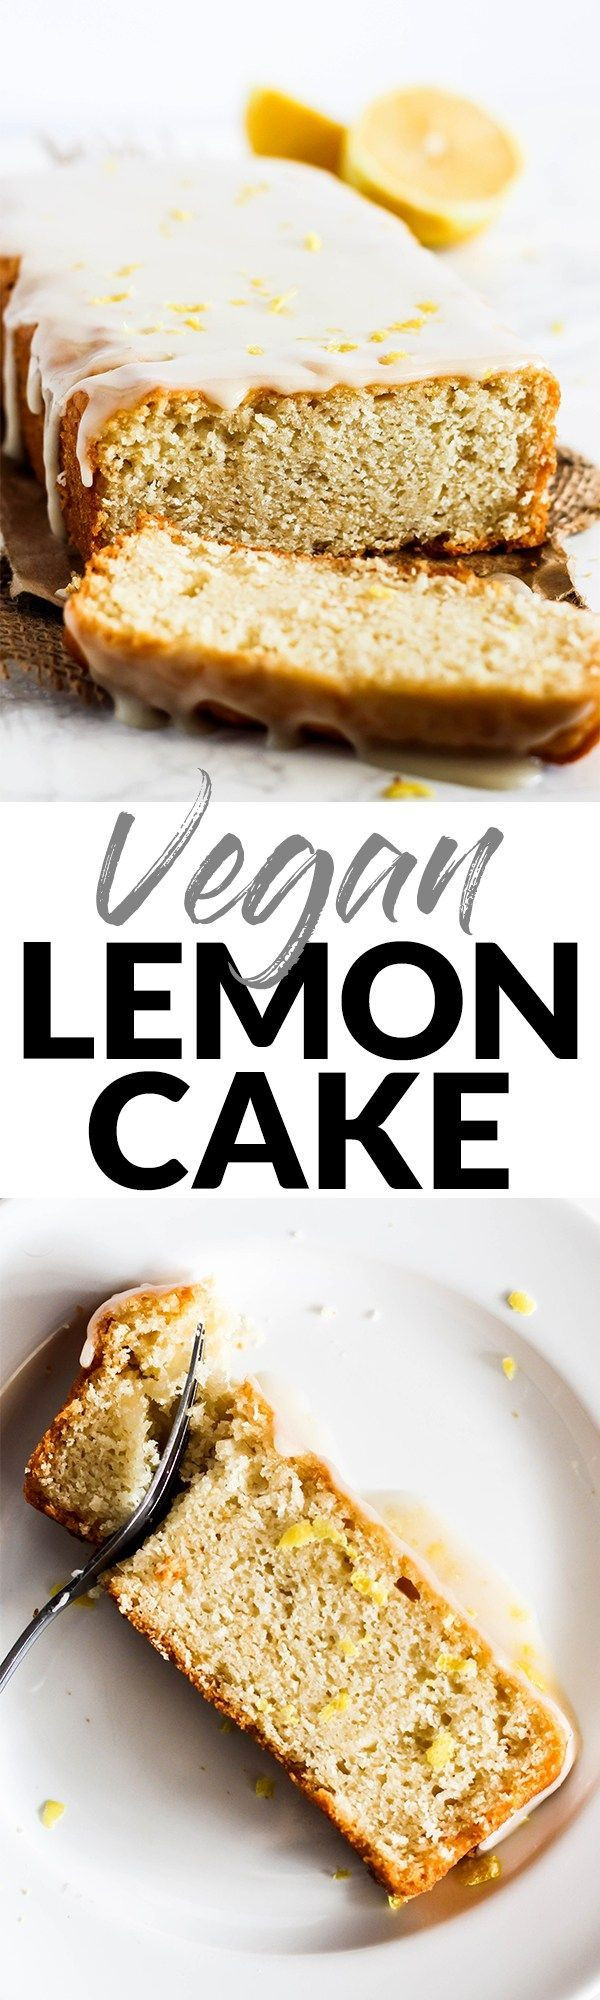 Vegetarian Lemon Cake Recipe
 Glazed Vegan Lemon Cake Recipe